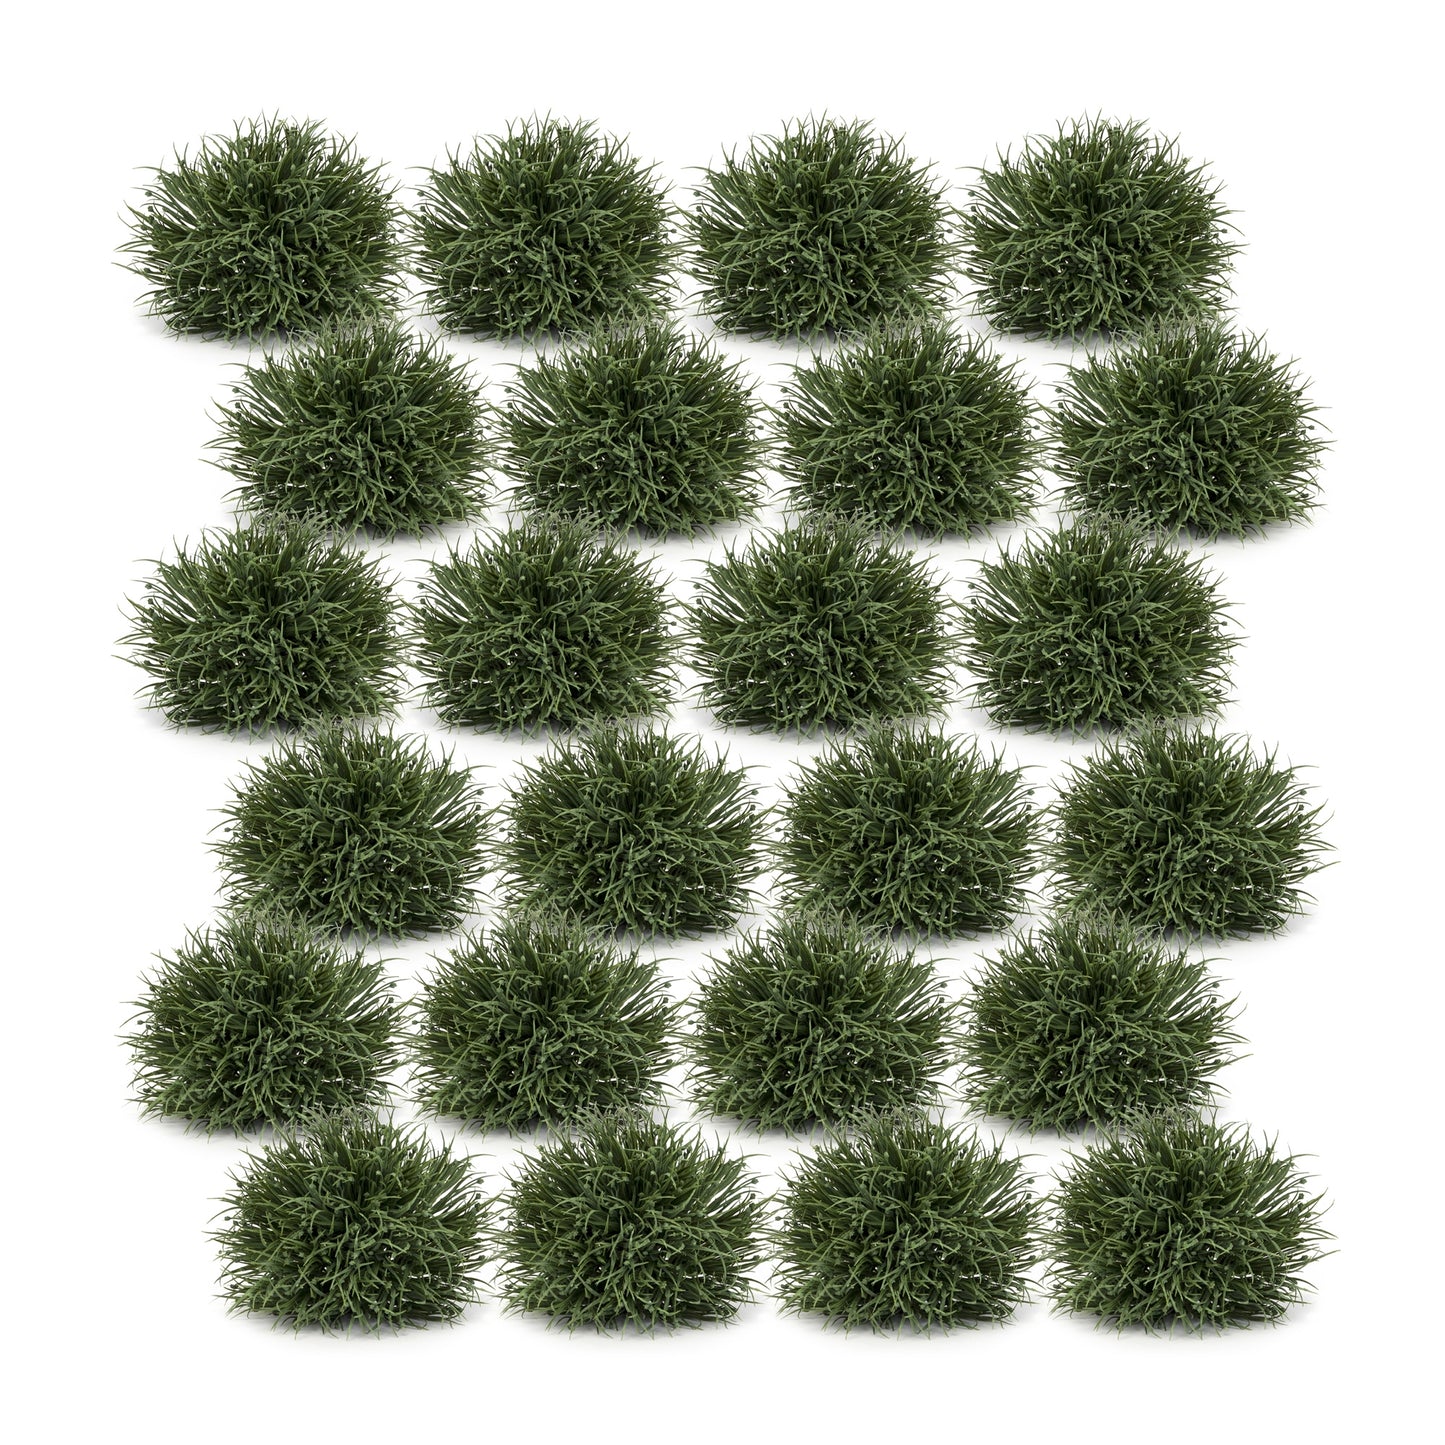 Spring Grass Half Orb (Set of 24)